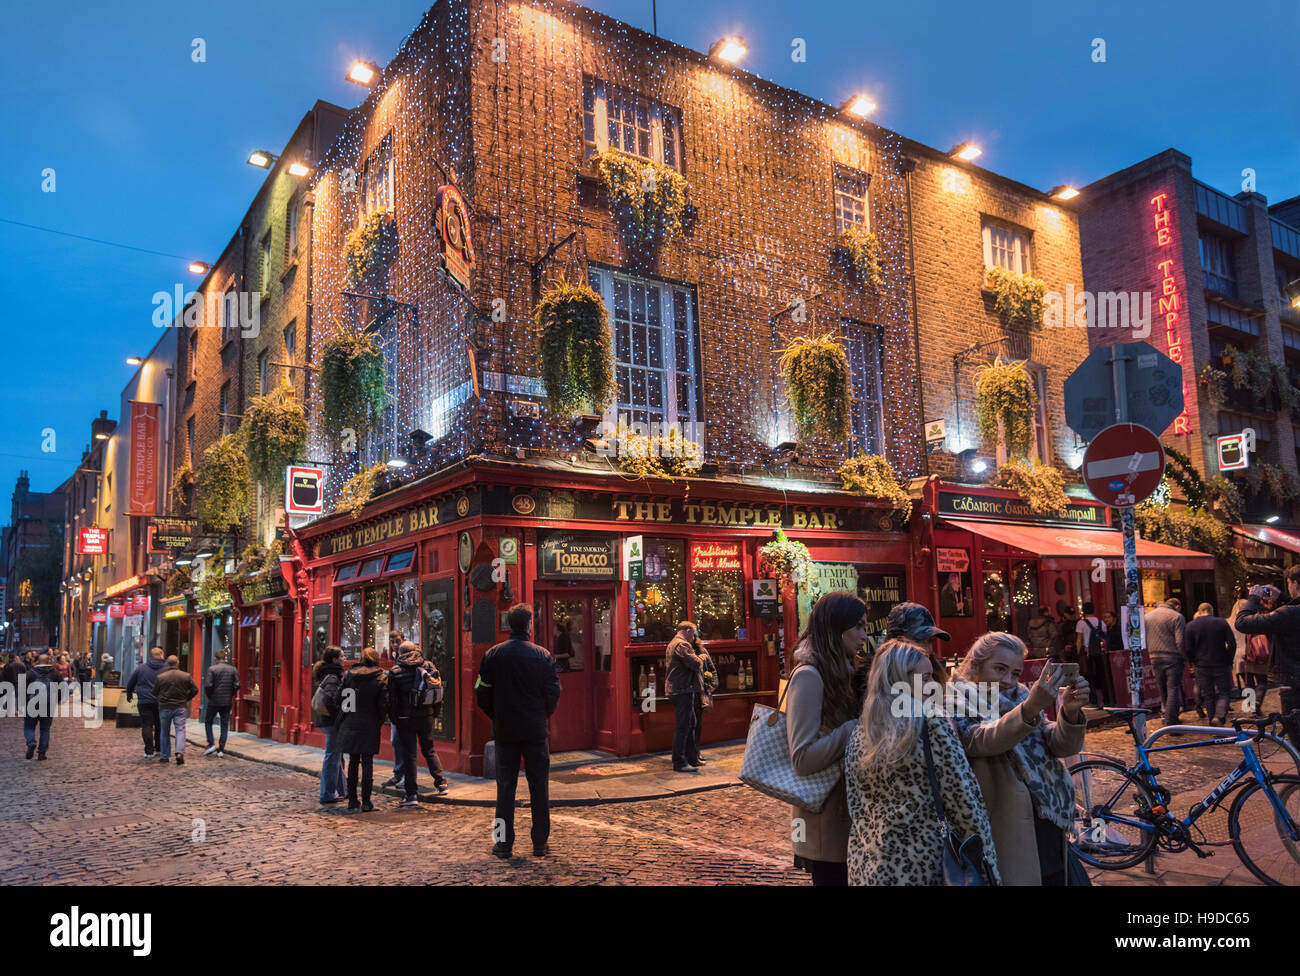 Die Temple Bar Pub Dublin Irland Stockfoto